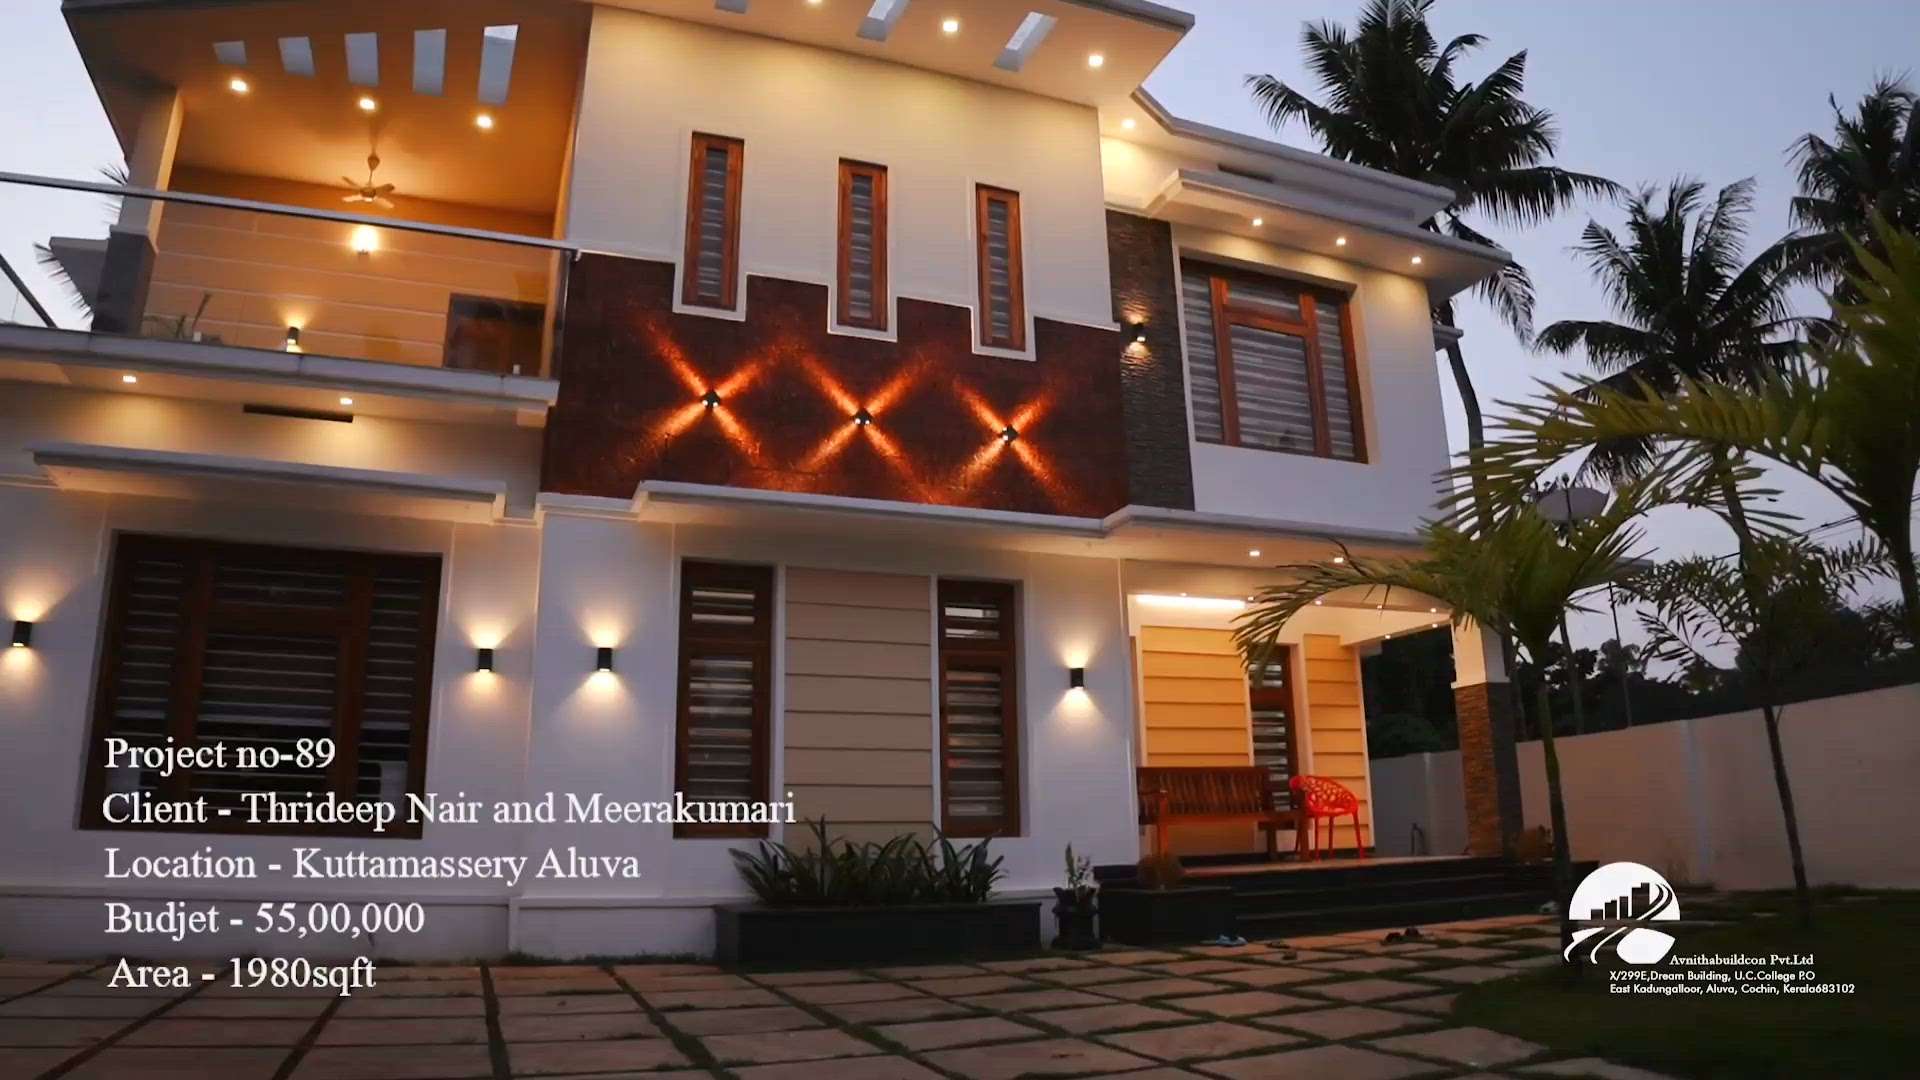 #ContemporaryHouse #HouseConstruction #ContemporaryDesigns #KeralaStyleHouse  #moderndesign 
Budget type design..